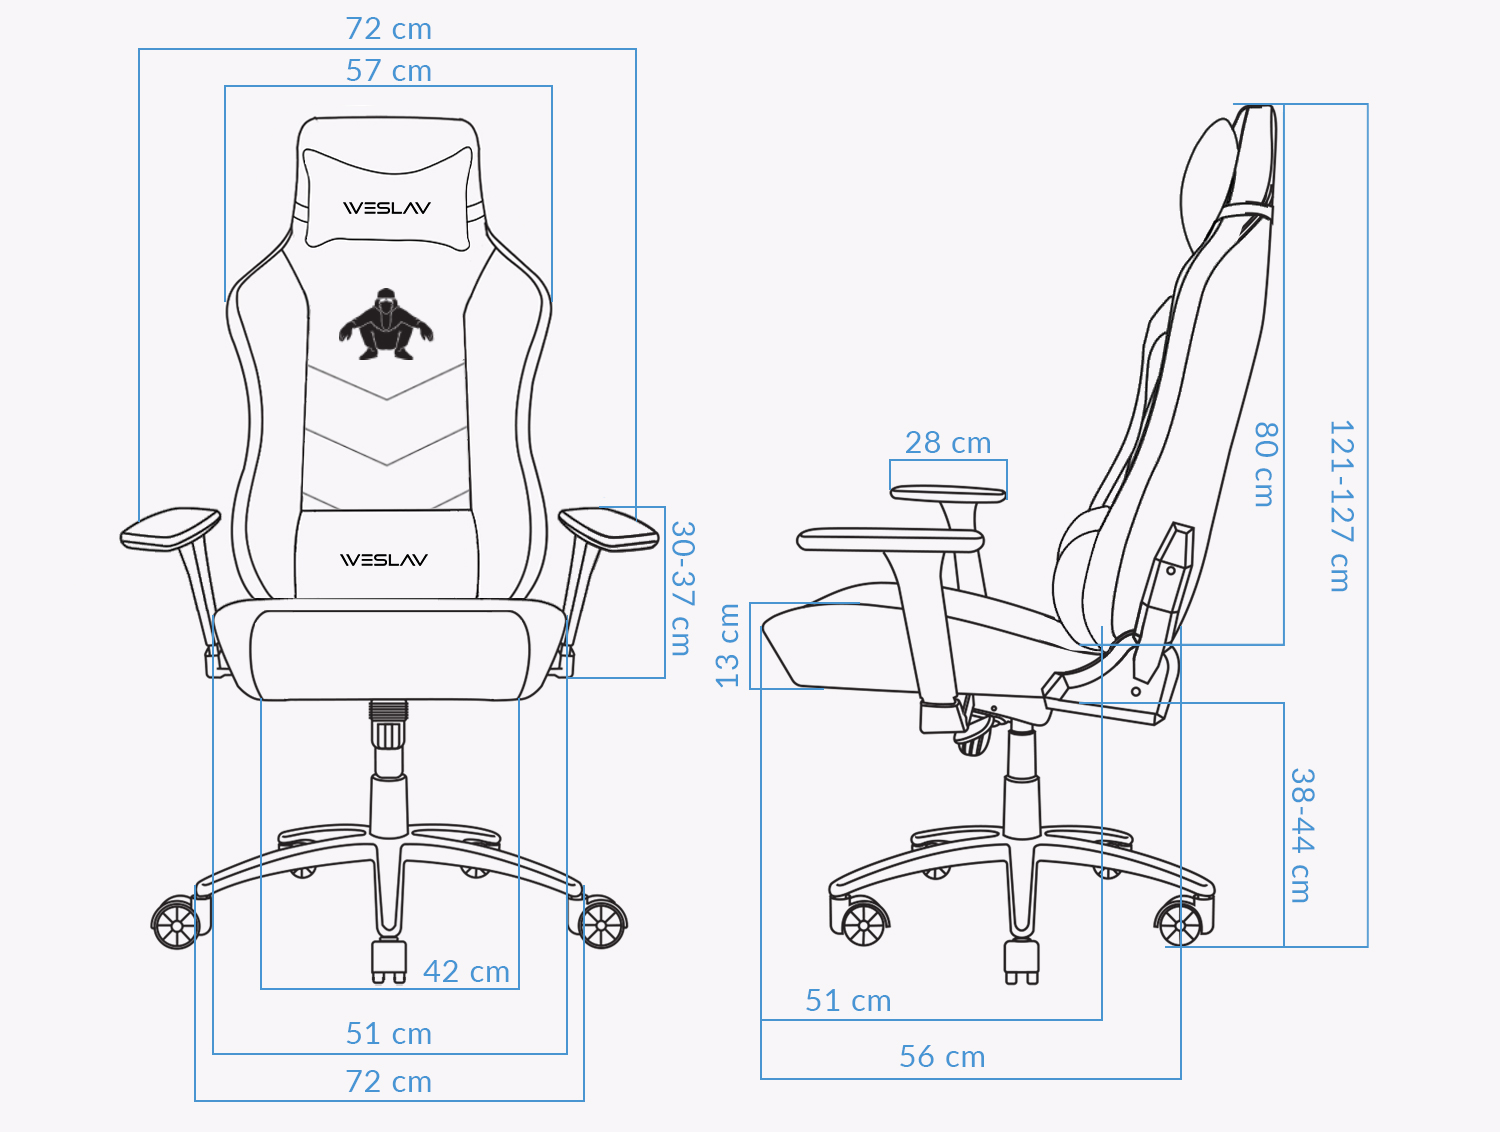 UVI x WESLAV Chair Measurements